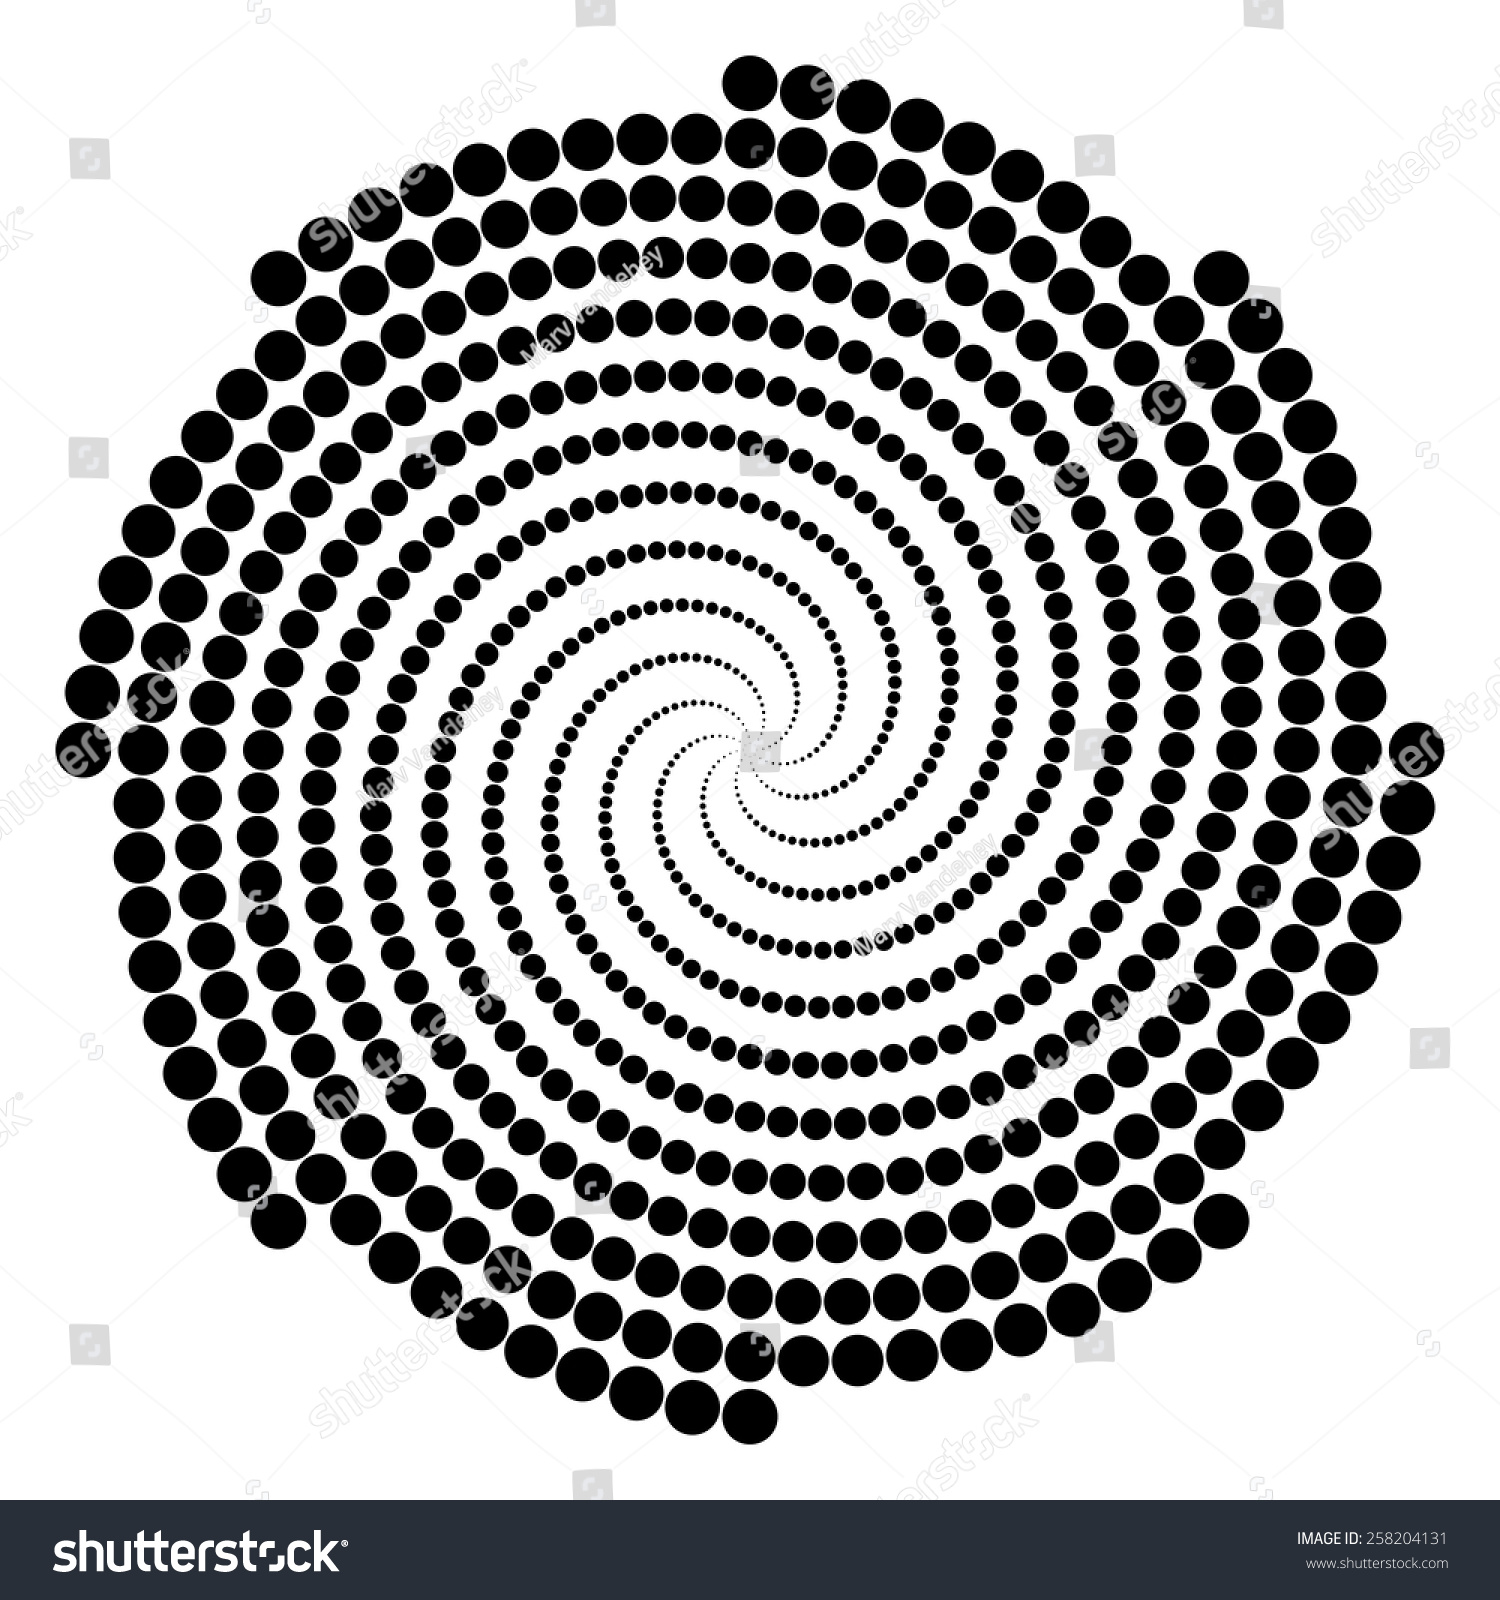 Abstract Spiral Design Black Dots Decreasing Stock Vector 258204131 ...